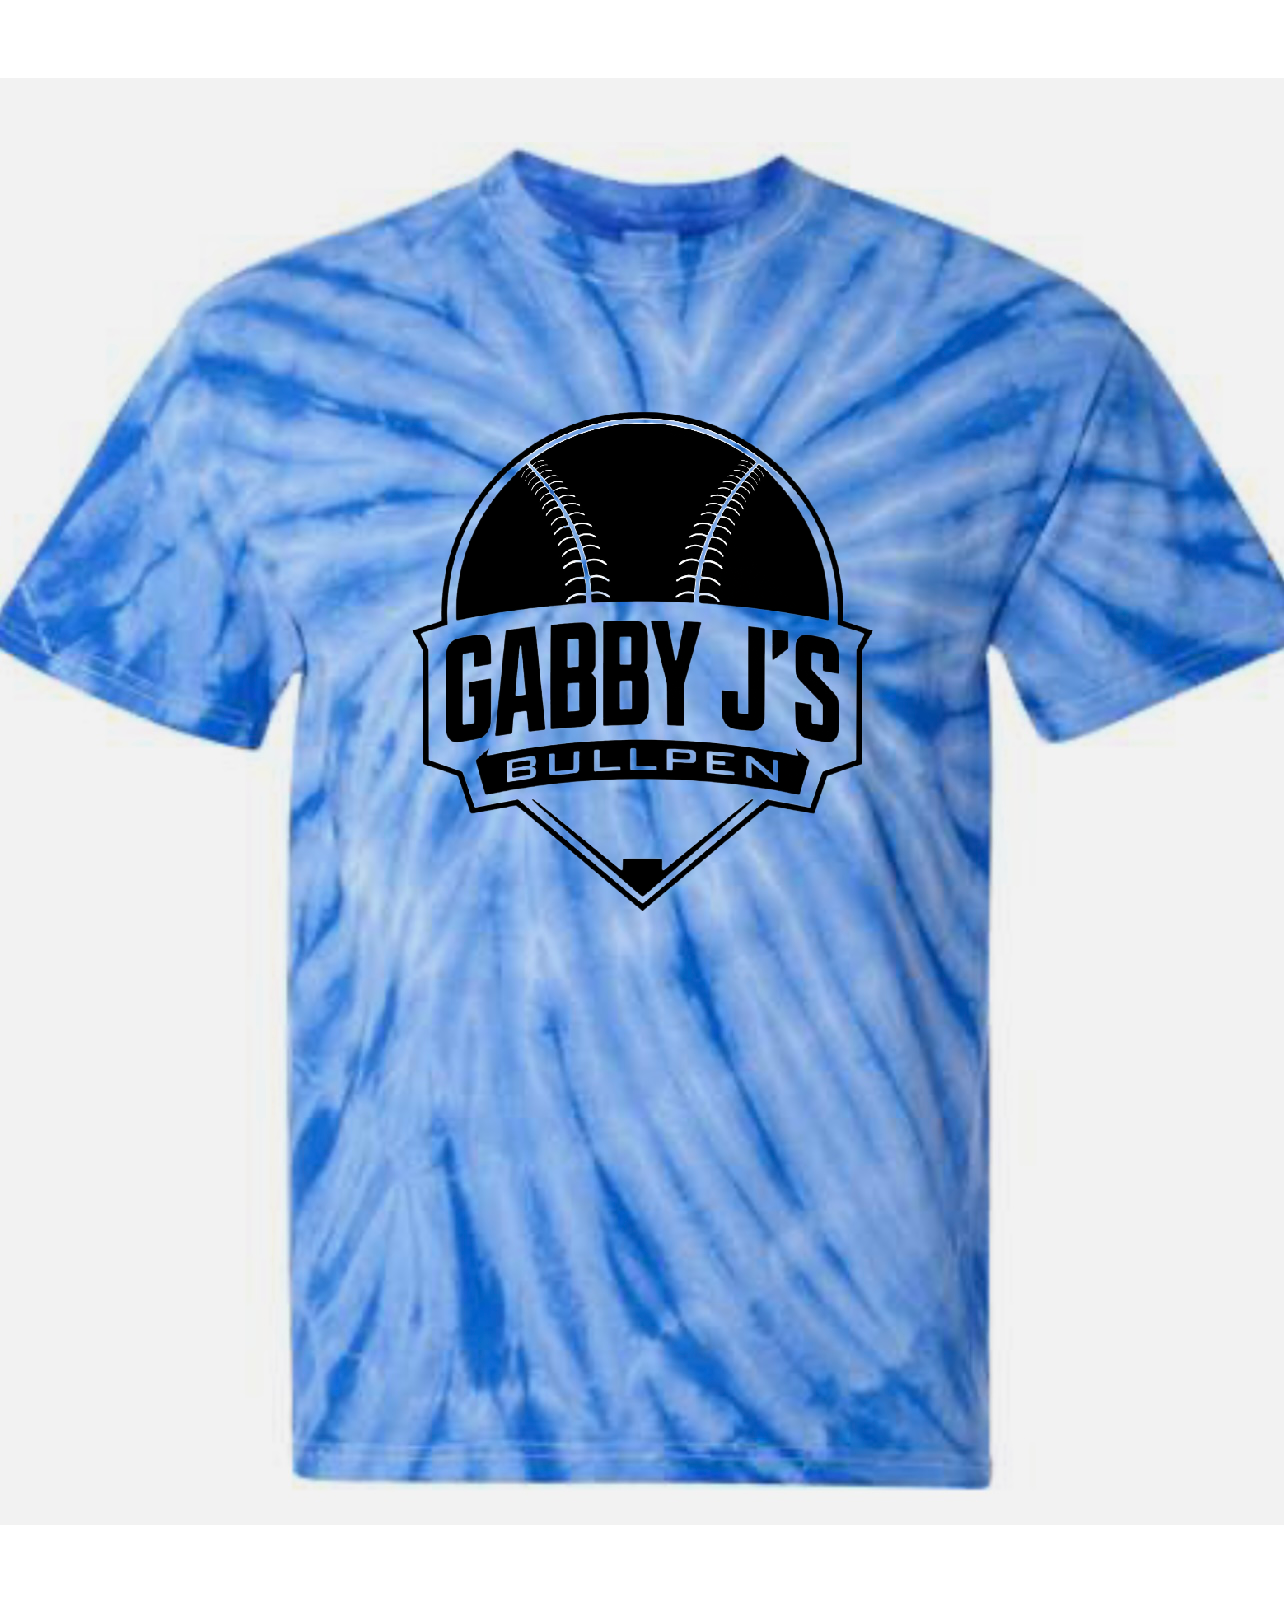 Gabby J’s Bullpen Tie Dye Tee